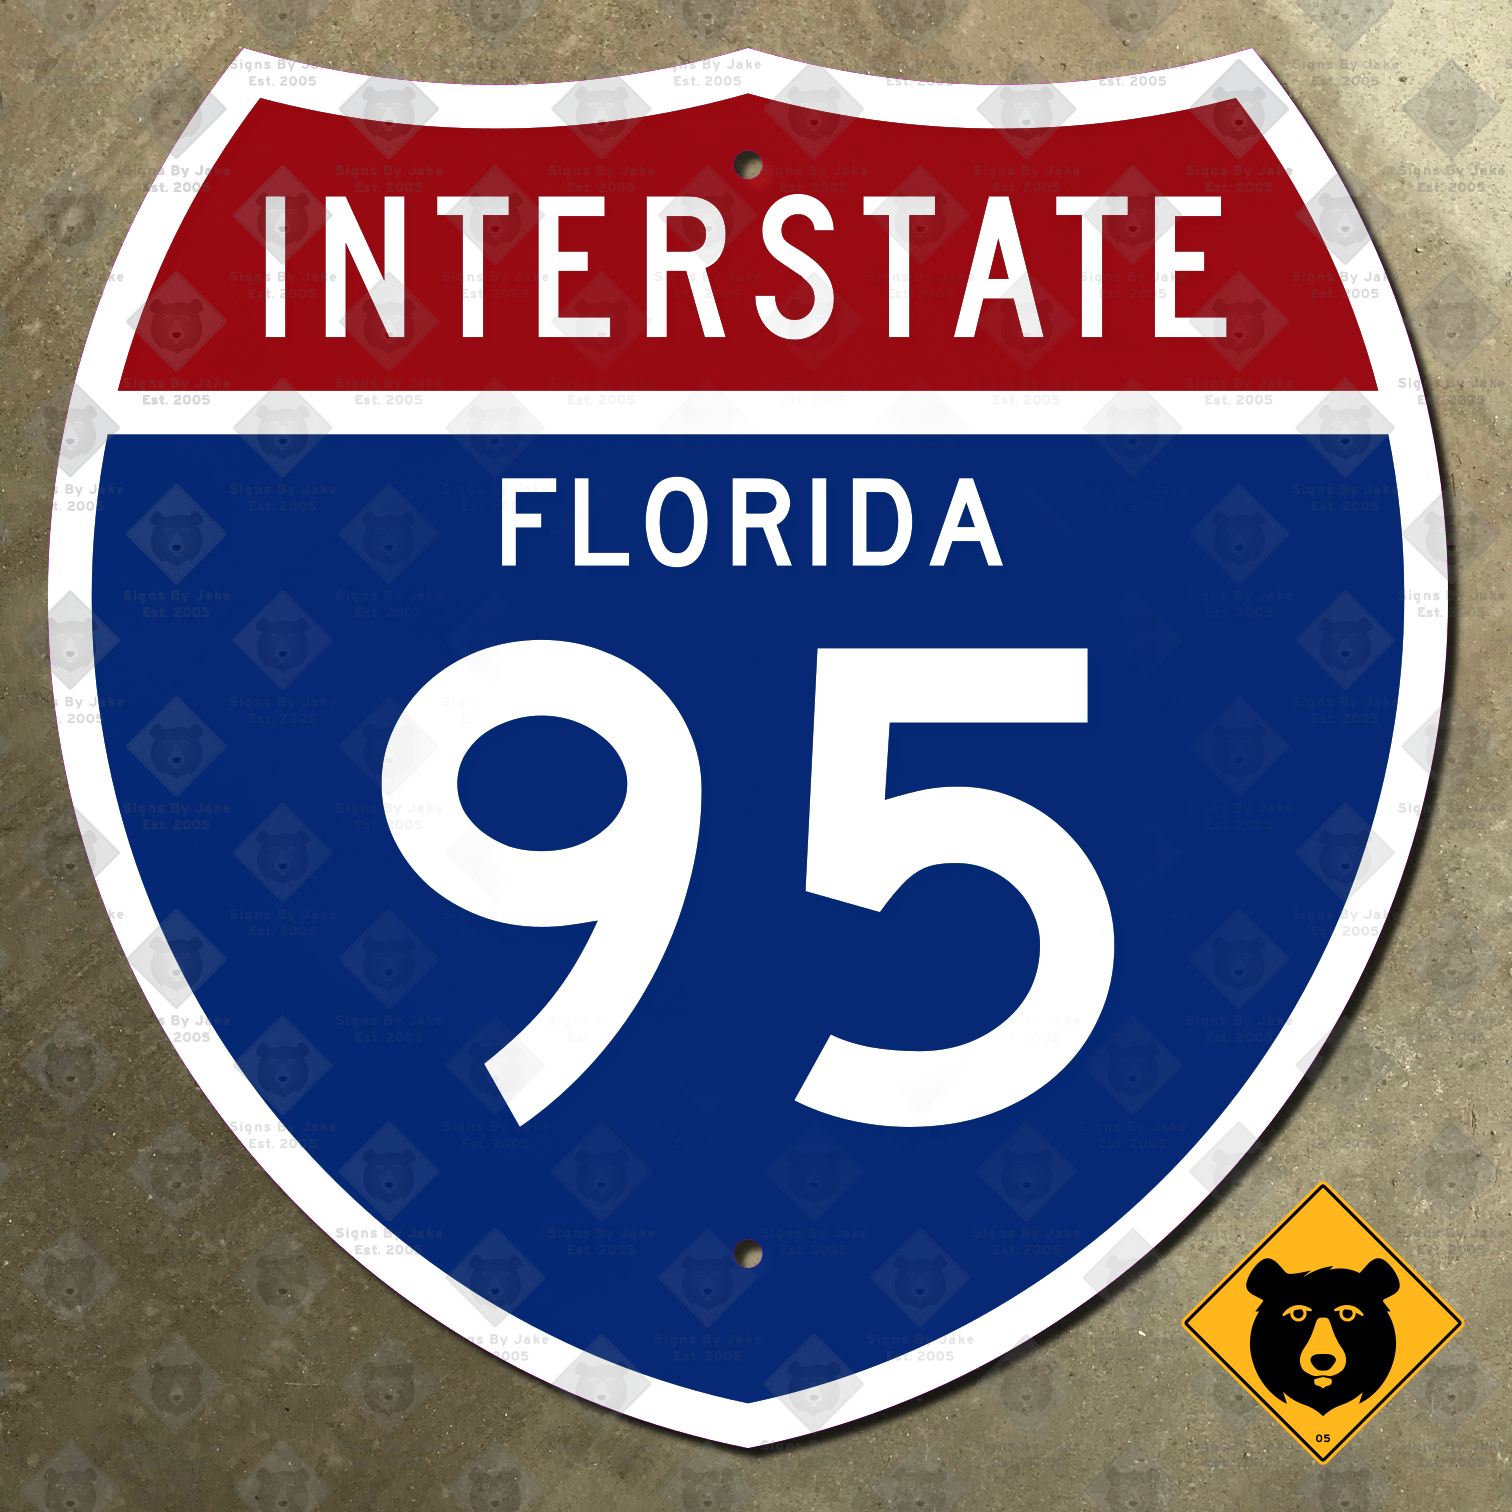 Florida Interstate 95 highway marker - Signs by Jake